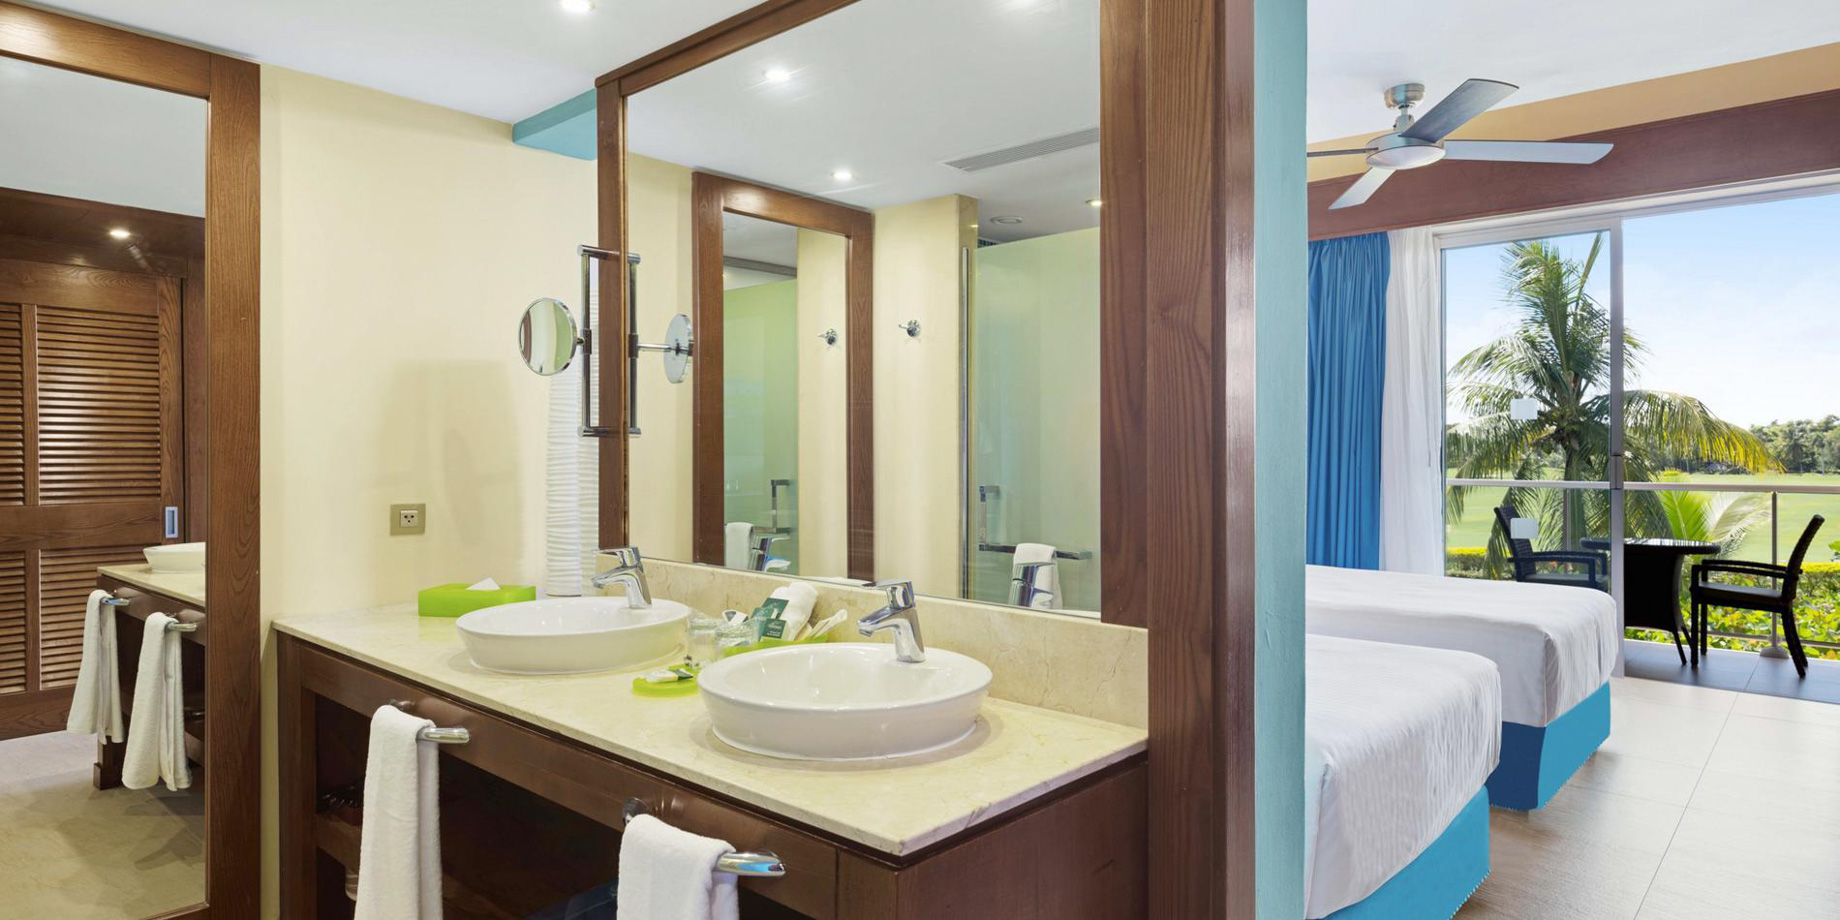 Barceló Bávaro Palace Hotel Grand Resort – Punta Cana, Dominican Republic – Superior Room